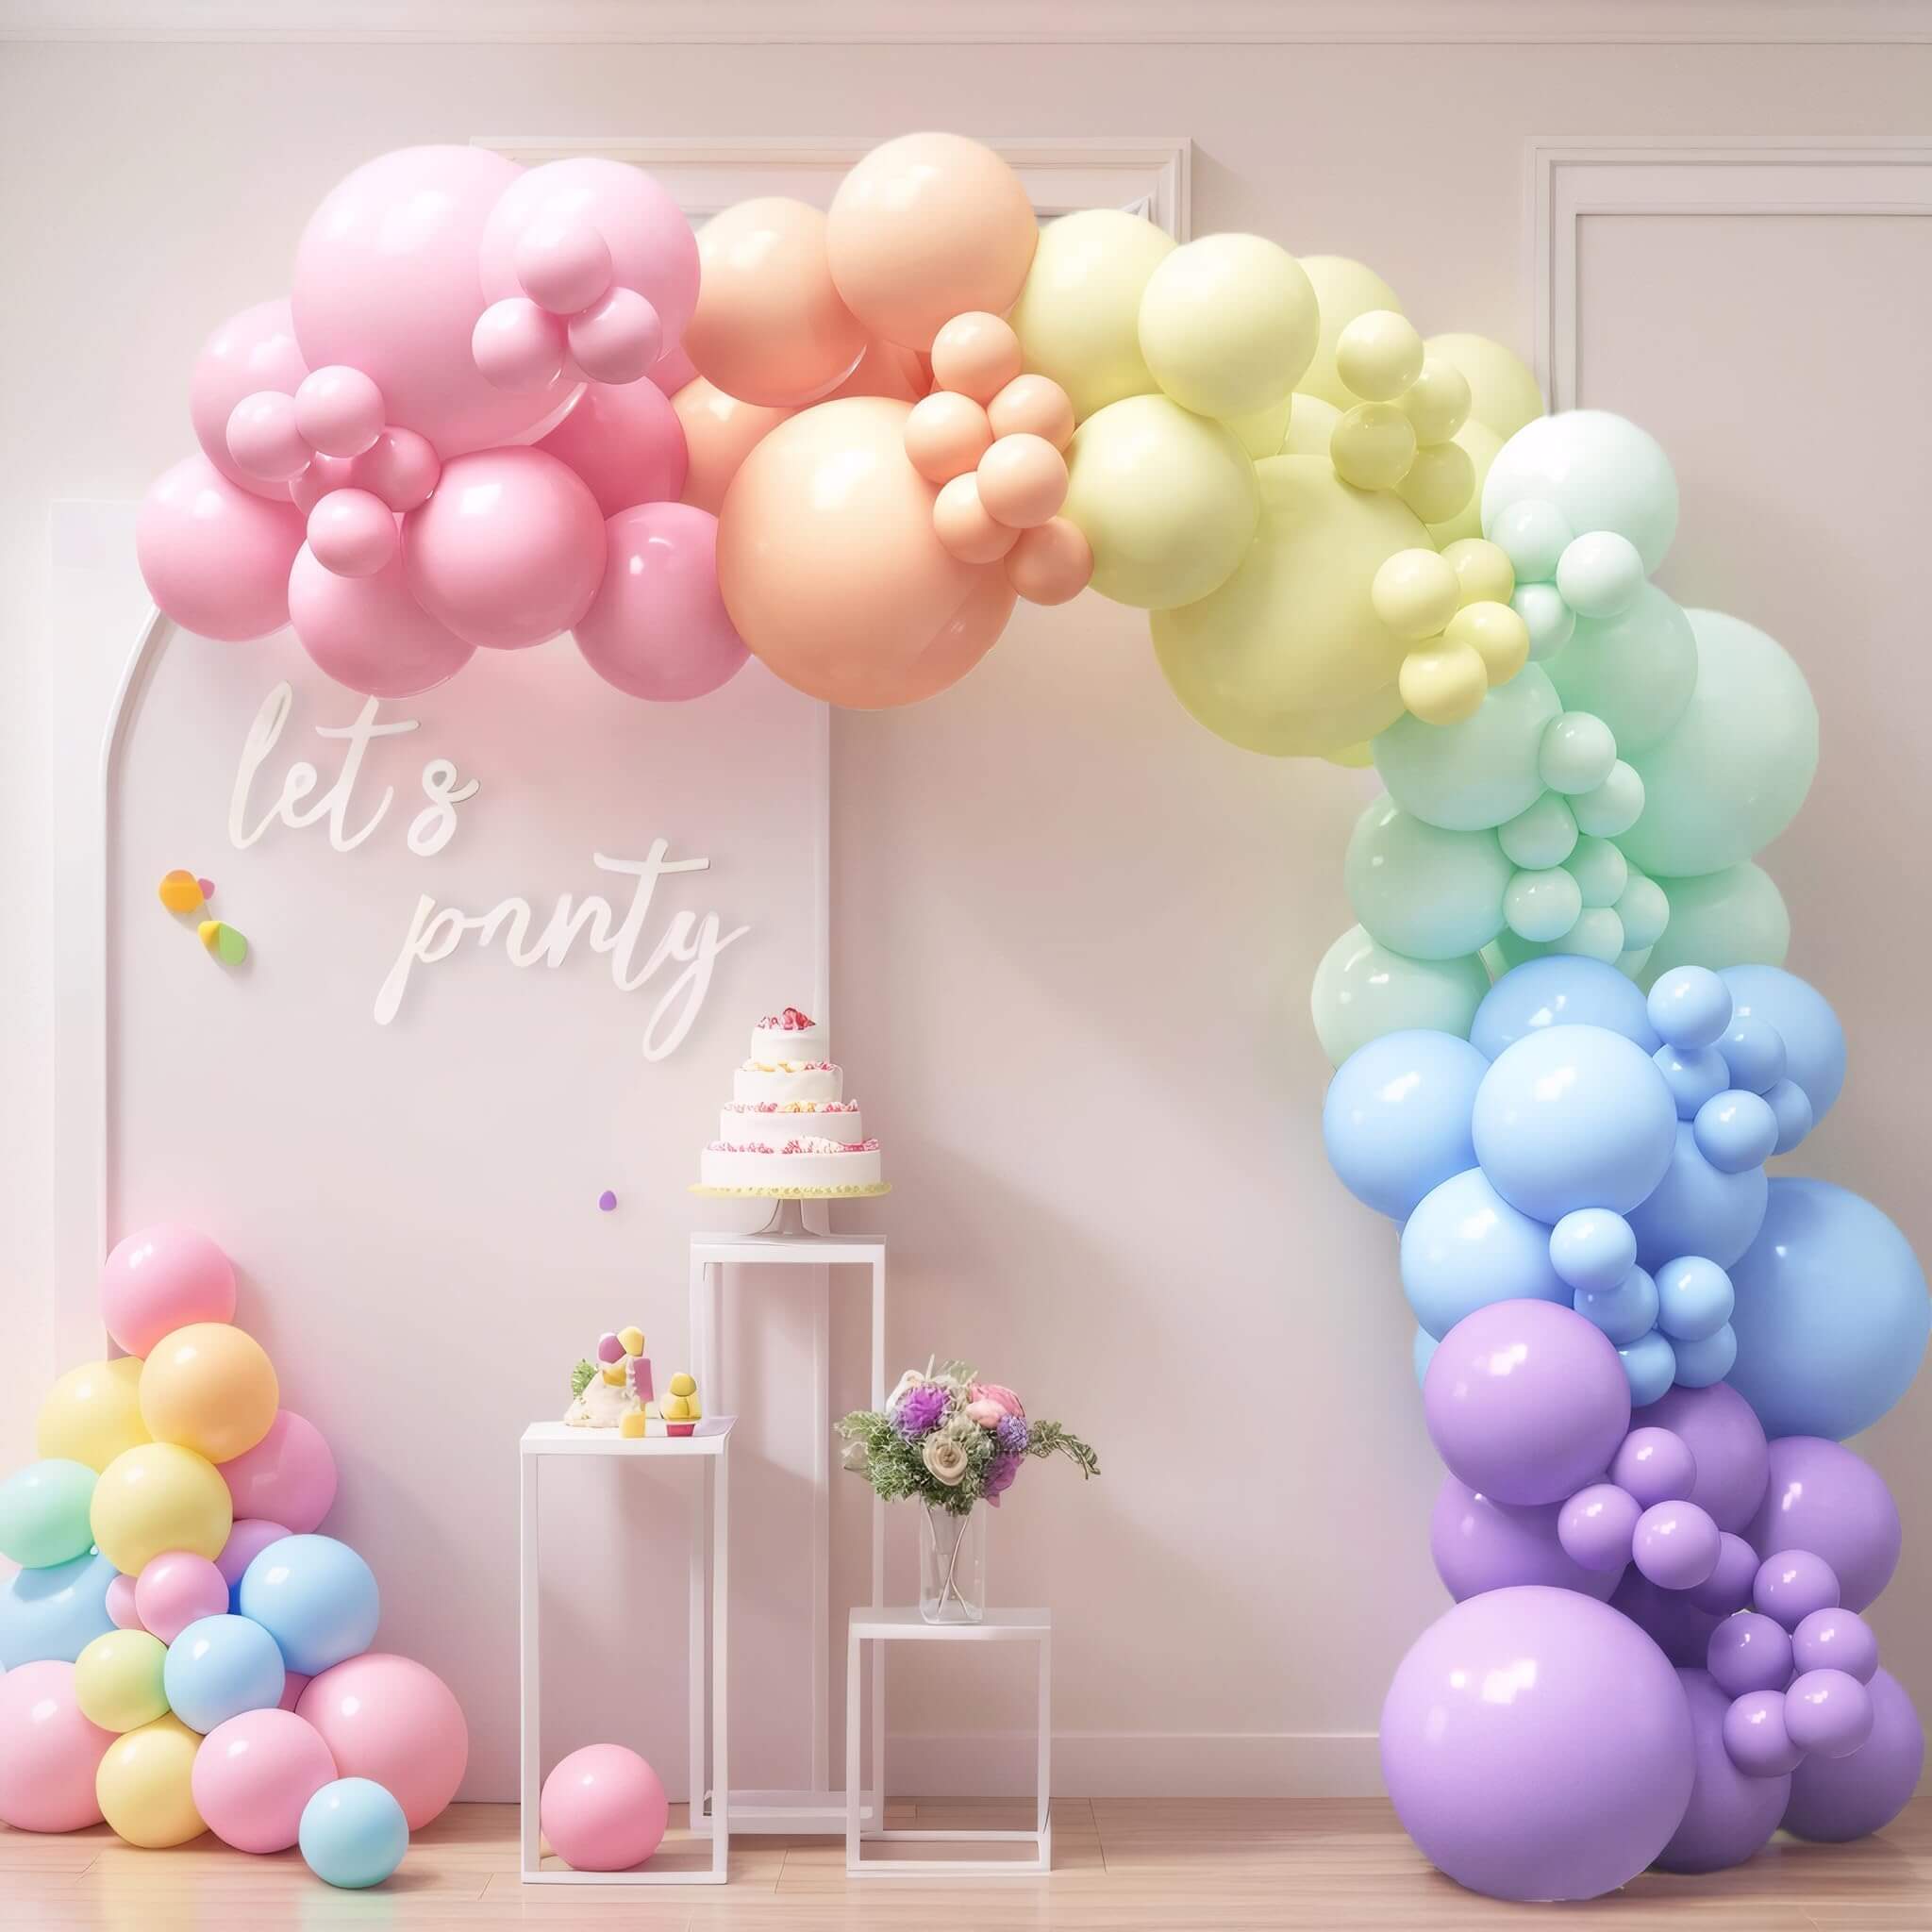 Balloon Arch children's birthday breakfast ideas